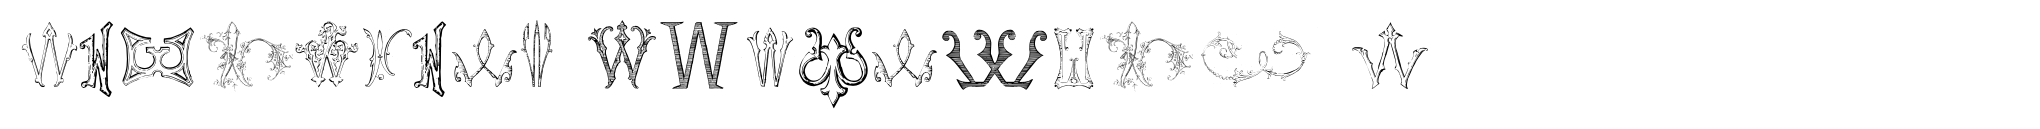 Victorian Alphabets W image